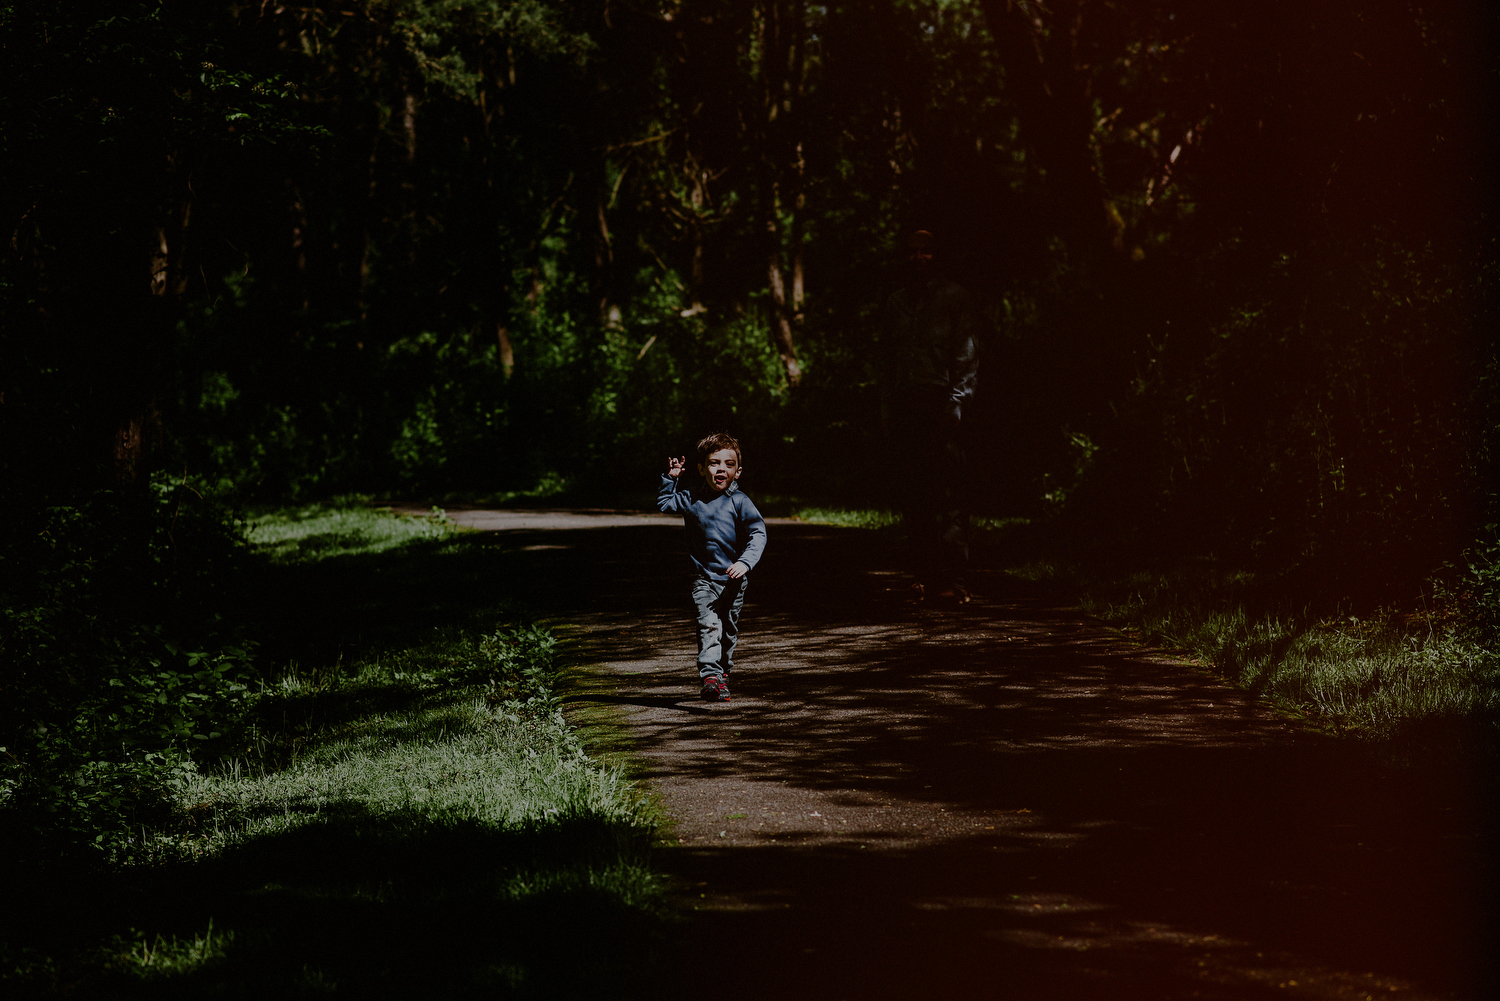 rambunctious boy running in sunlight in park